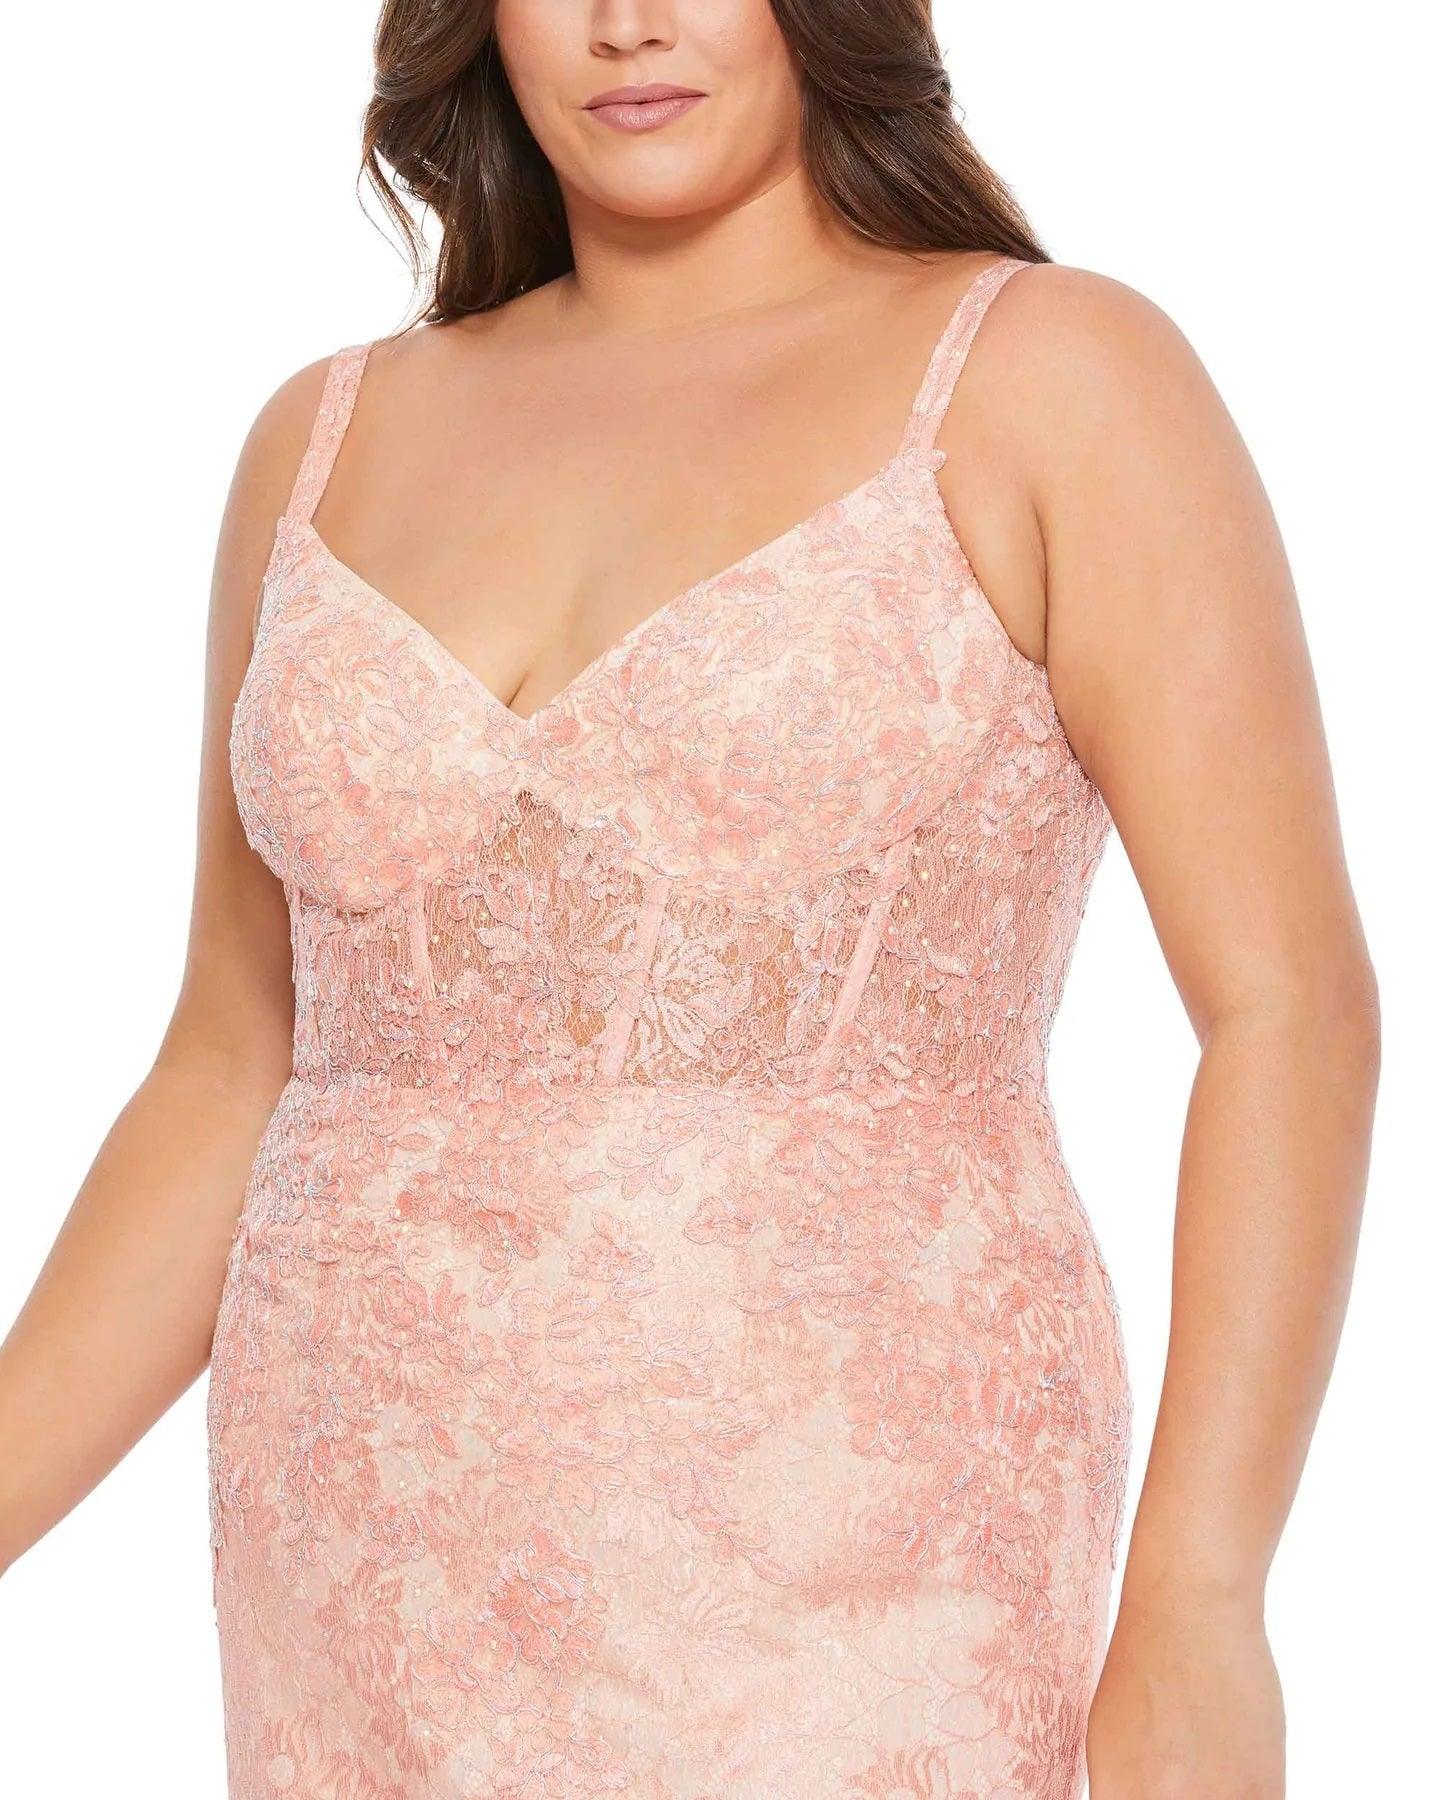 Mac Duggal Fabulouss Long Plus Size Lace Gown 49325 - The Dress Outlet